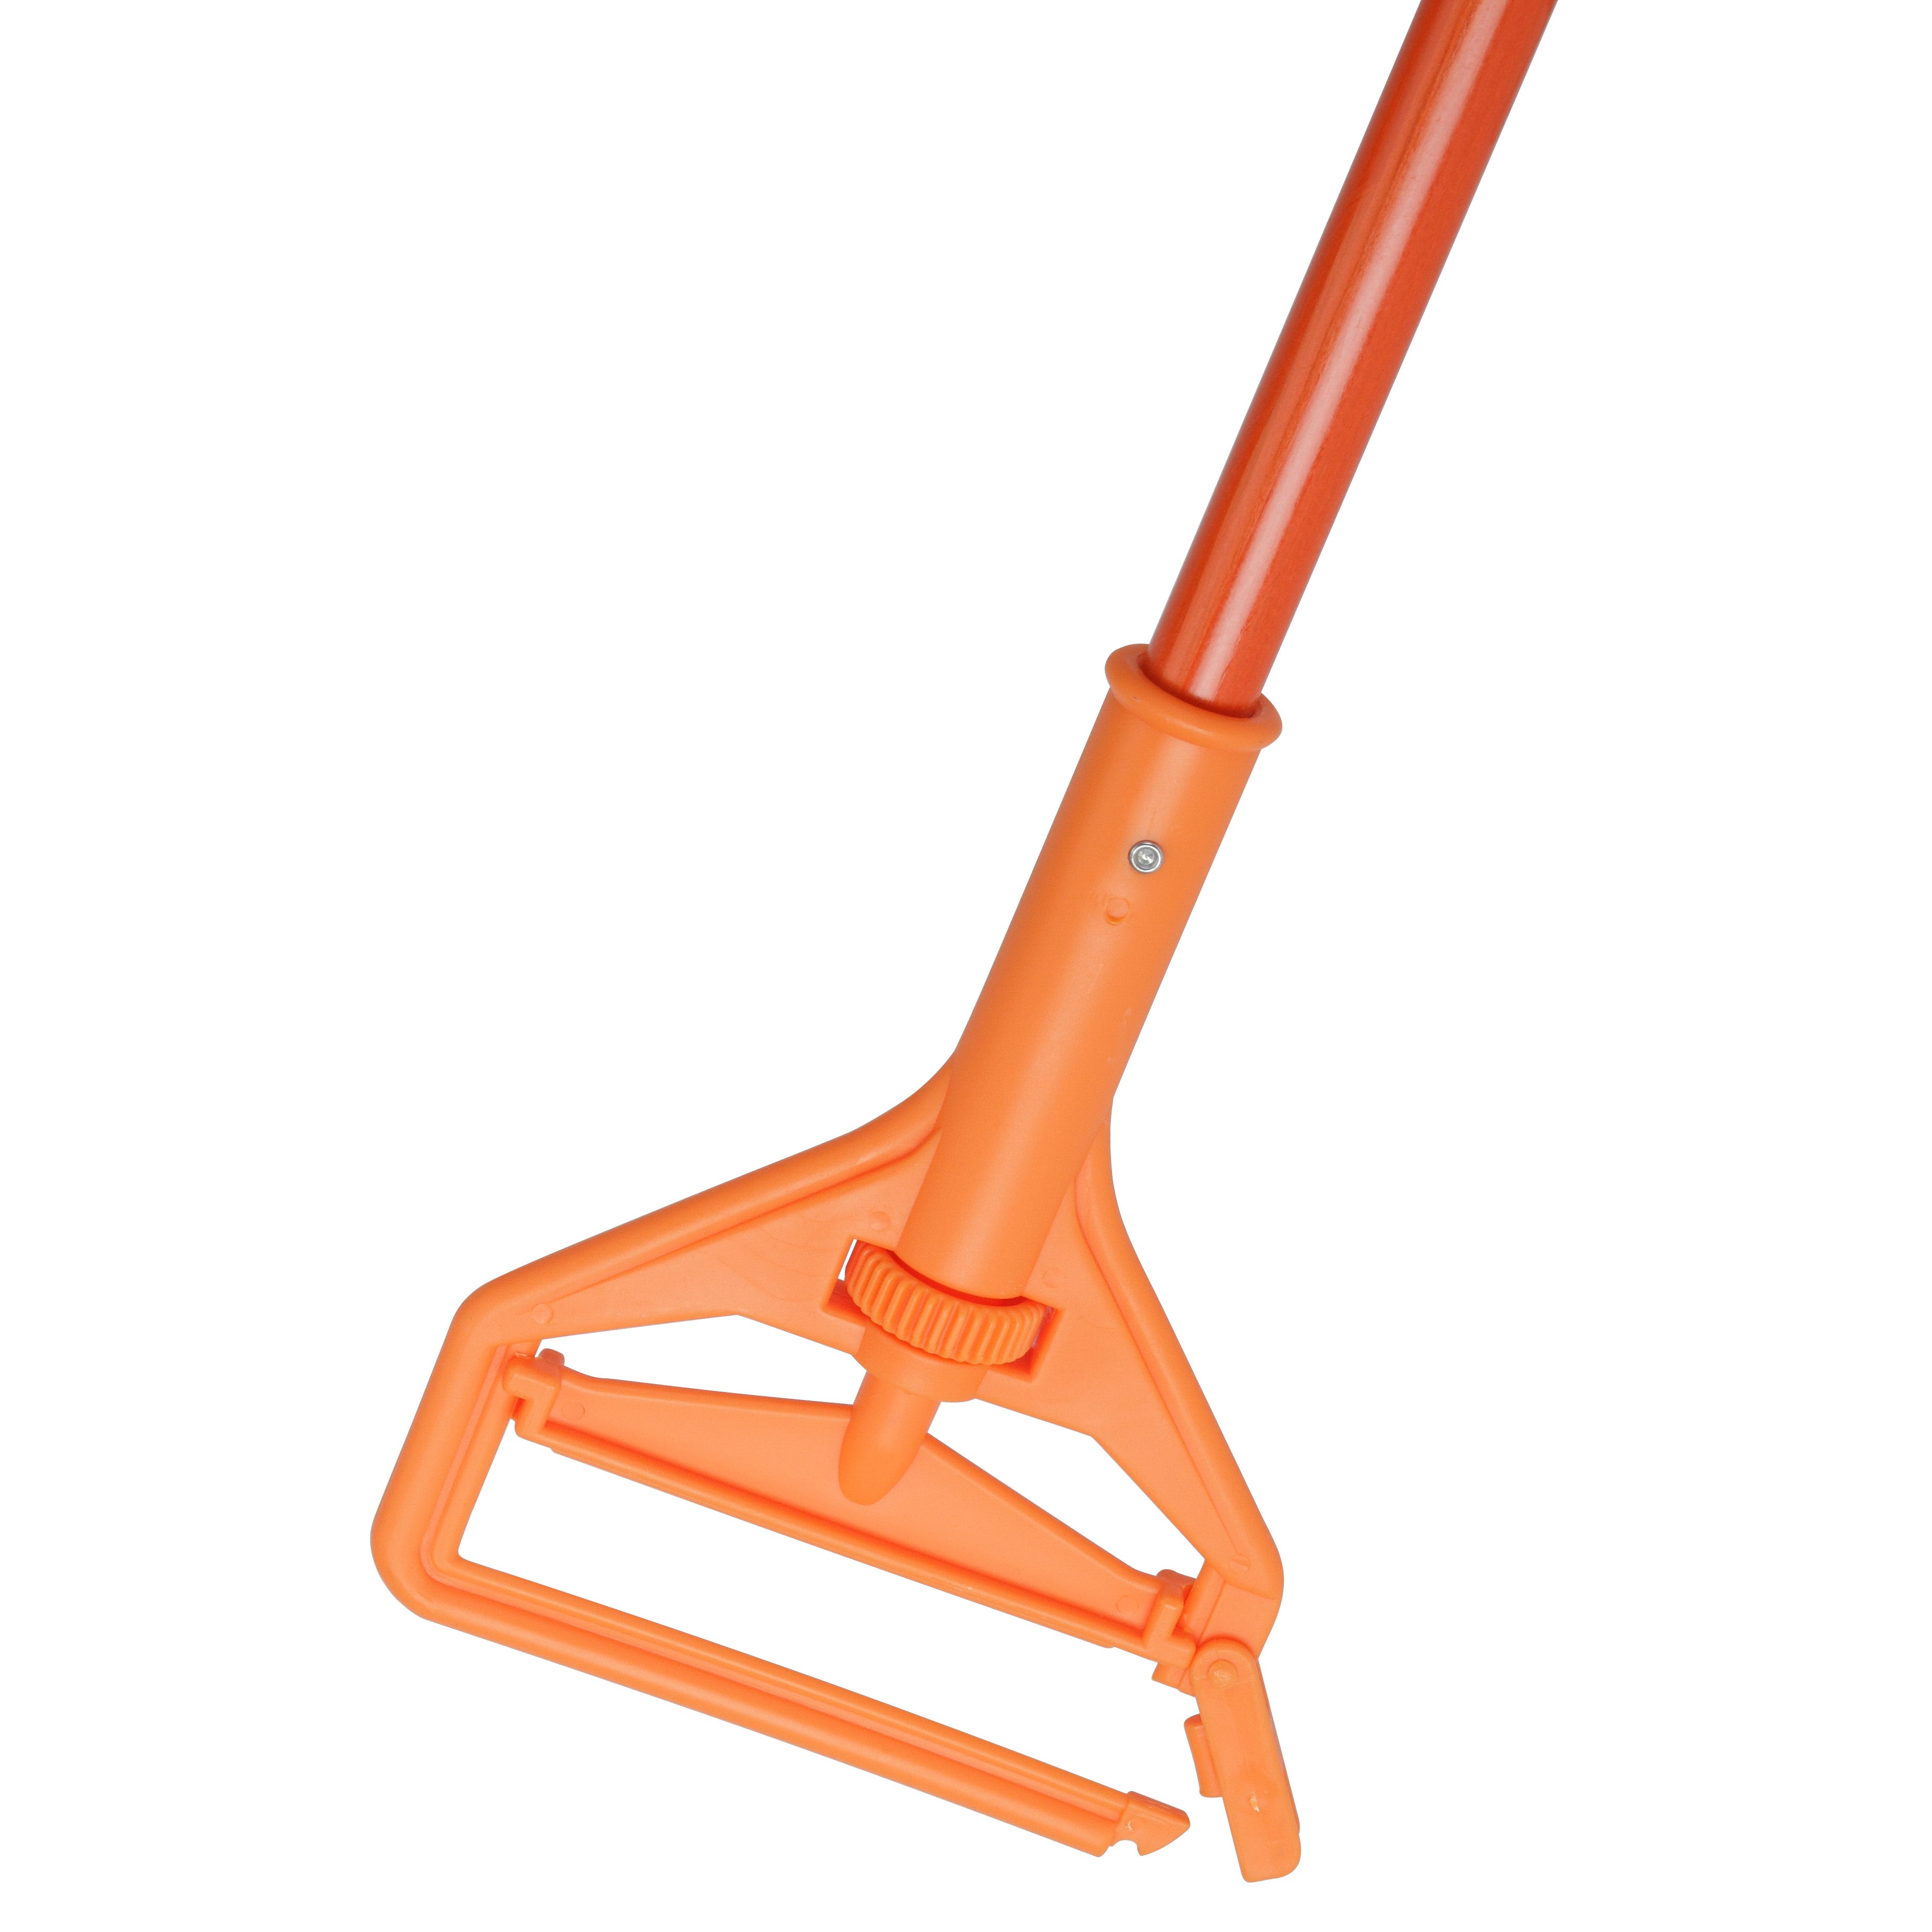 Royal Industries (MOP STK SSL FG) Orange Side Load Mopstick, Fiberglass Handle